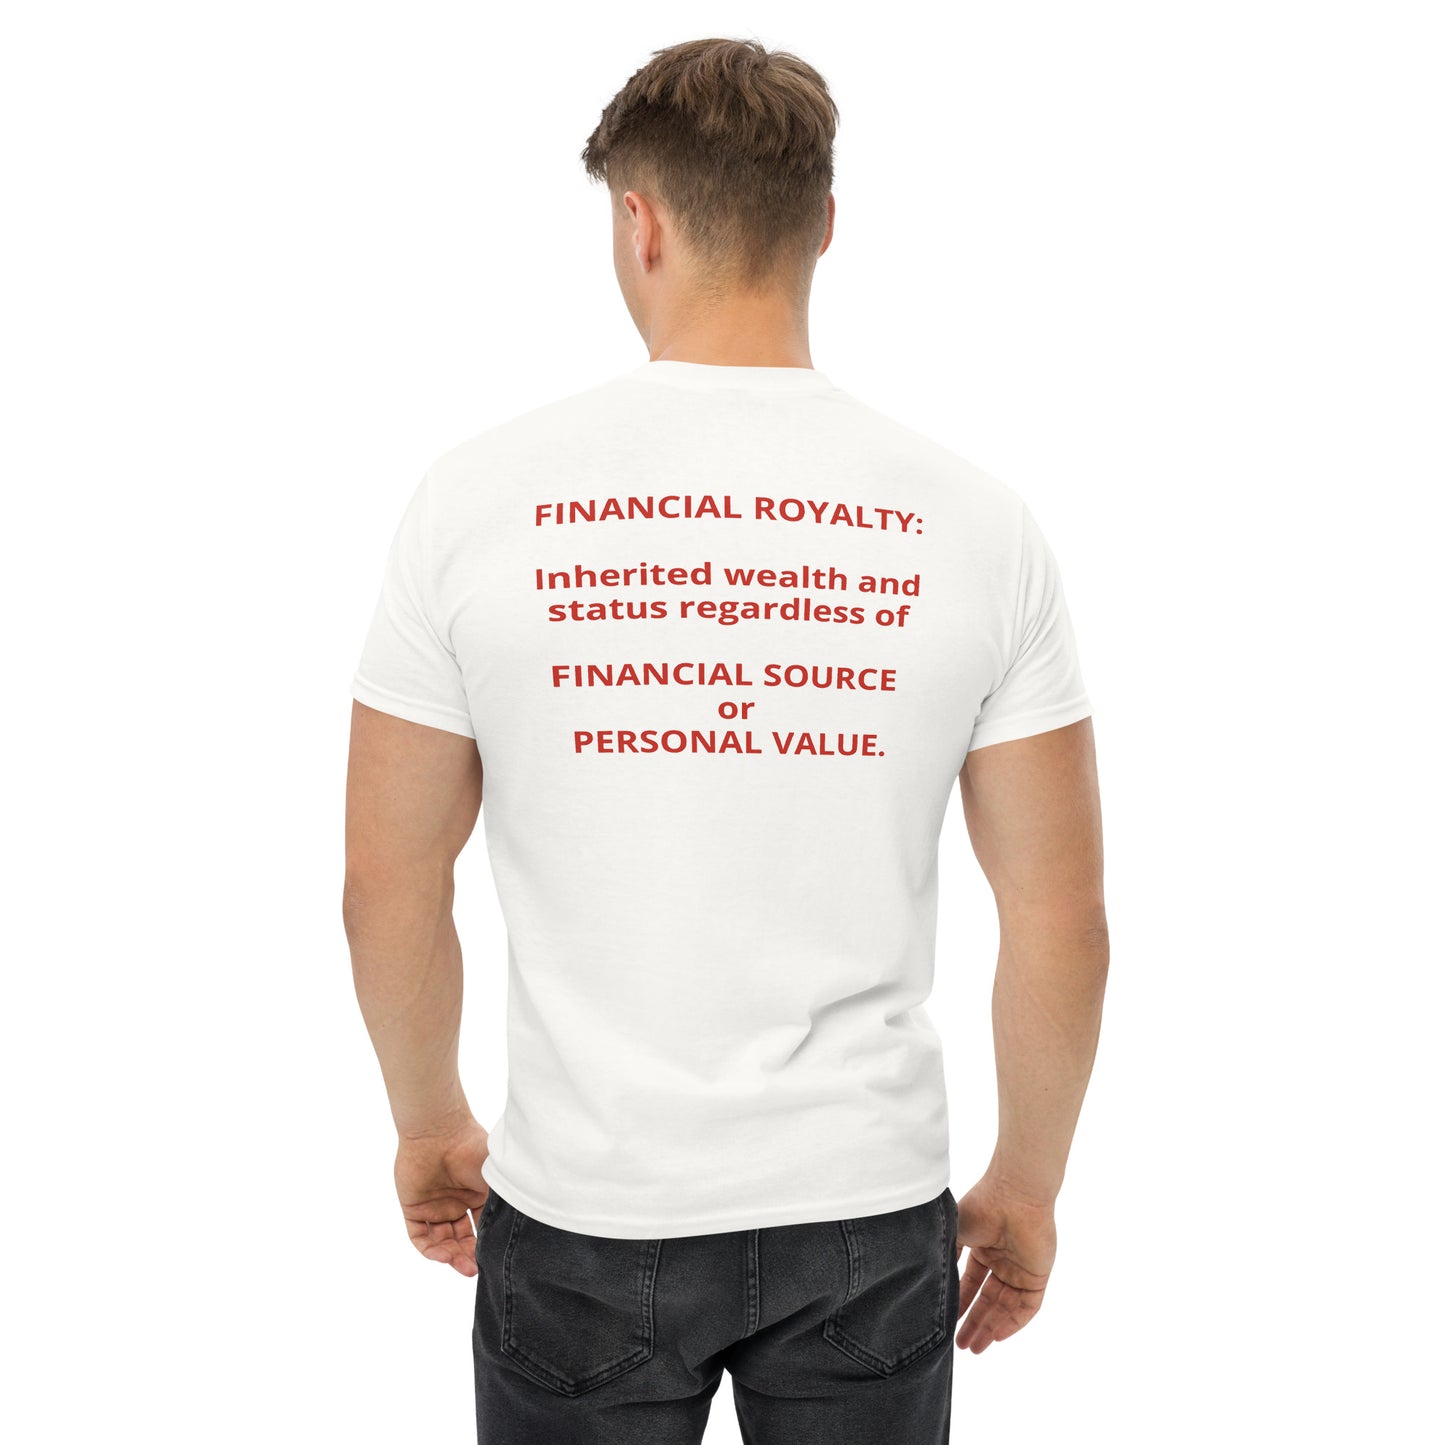 Financial Royalty - / Definition